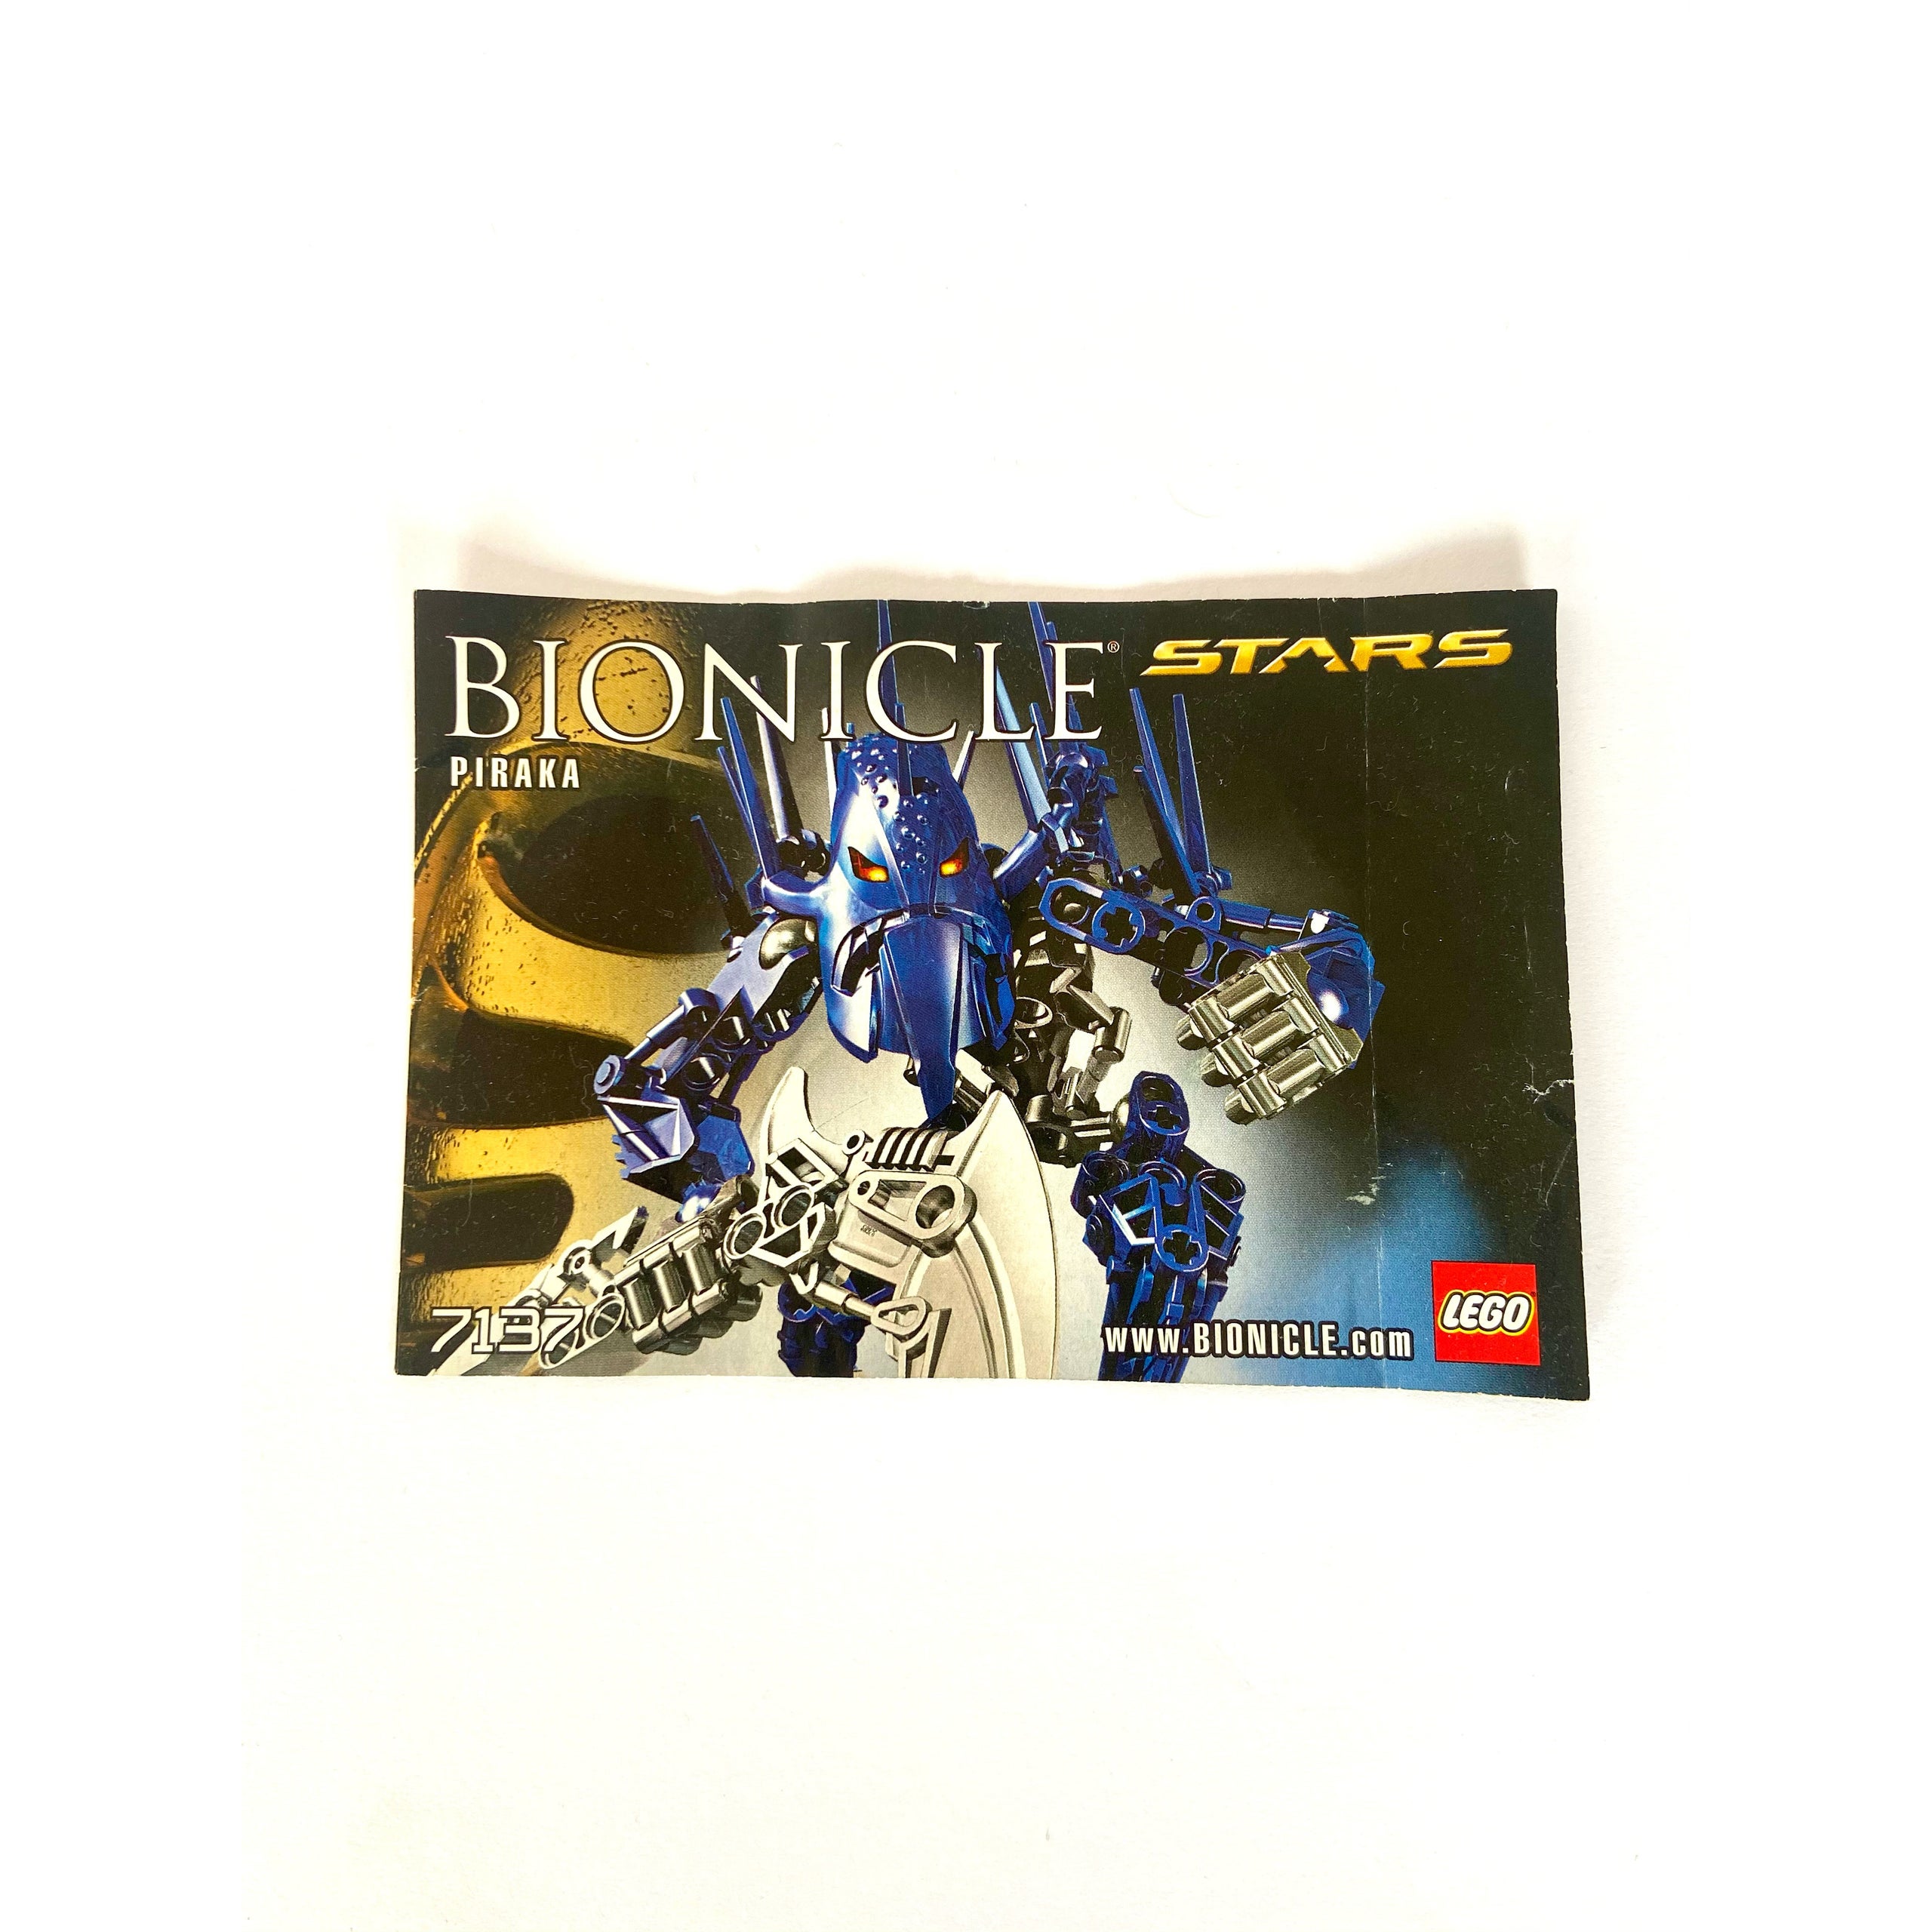 bionicle stars piraka